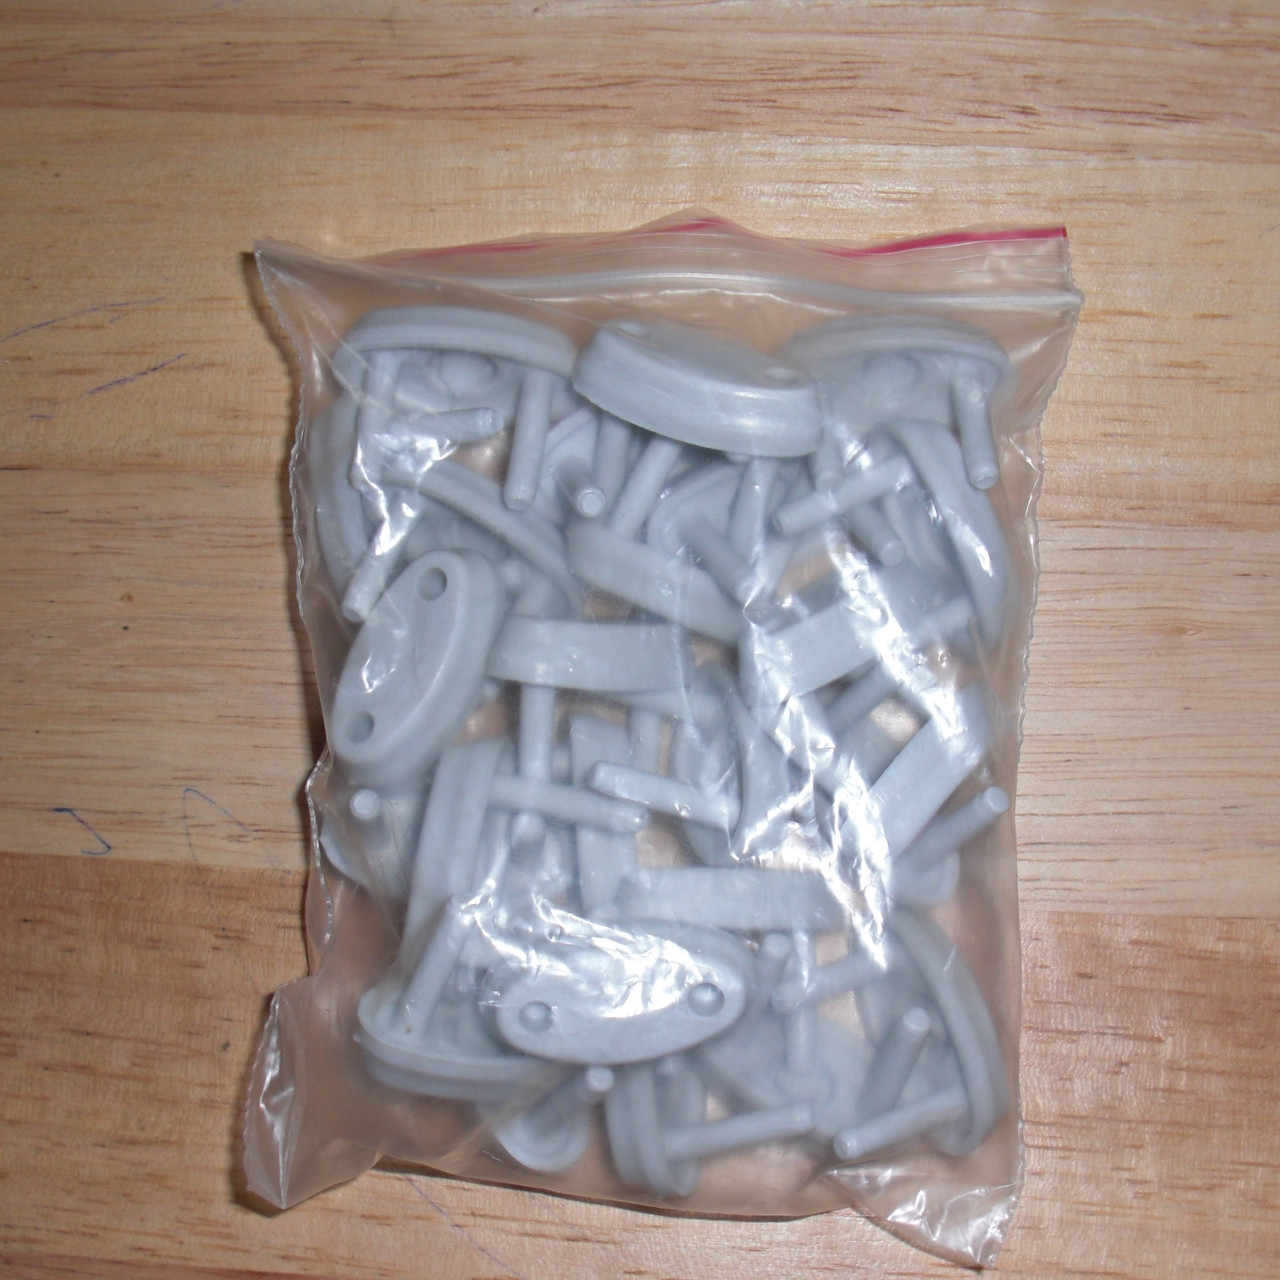 Захист для розетки 1 упаковка (25 штук) (03075)